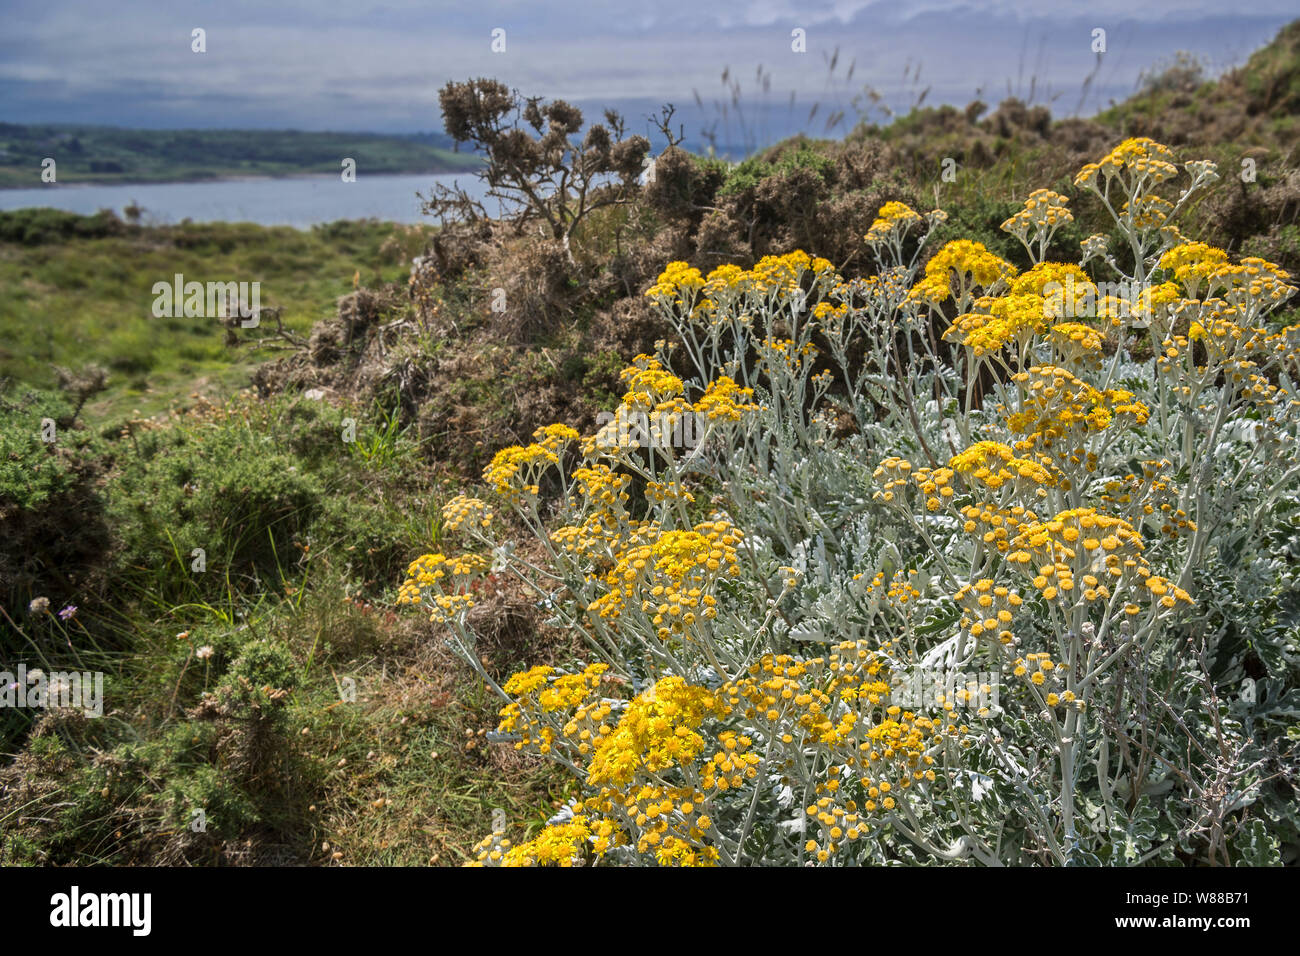 Silver ragwort / dusty miller / cineraria ragwort / silver groundsel (Jacobaea maritima / Senecio cineraria) in flower along the North Sea coast Stock Photo